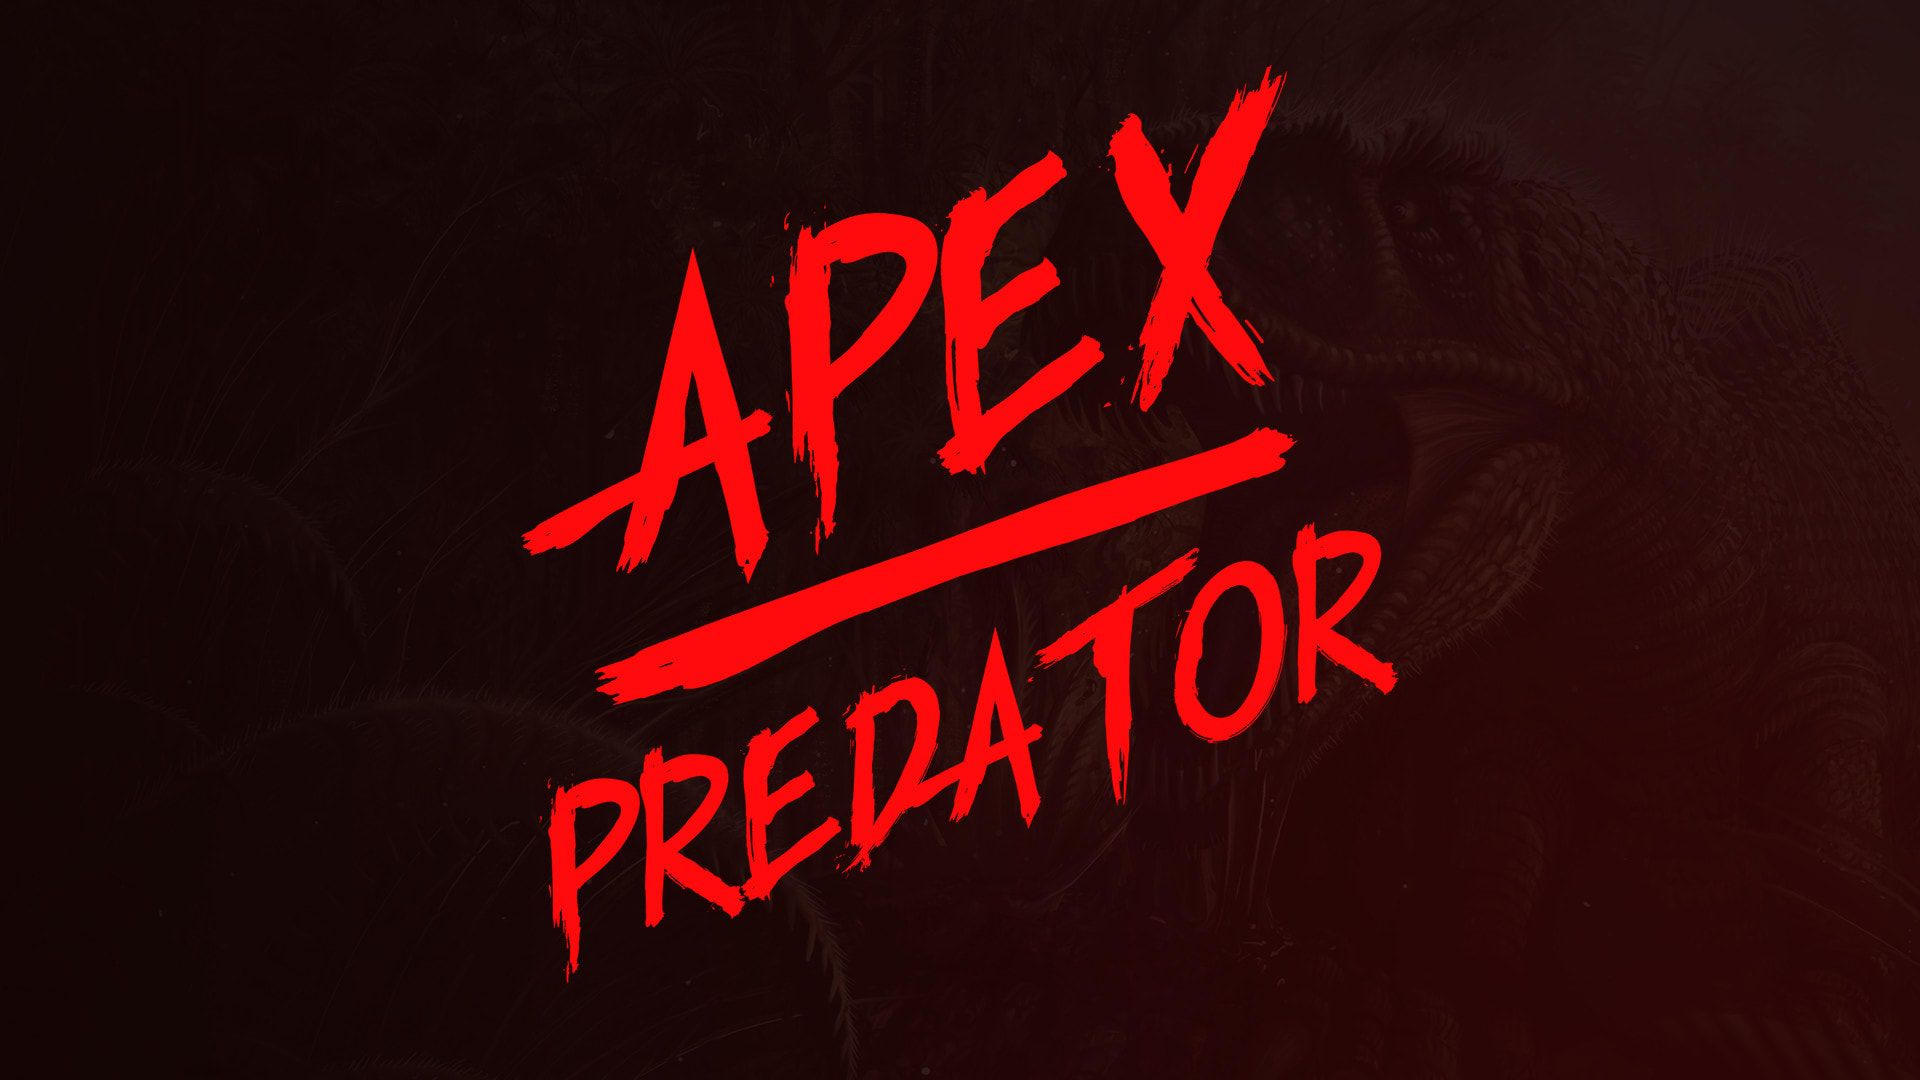 Ape X Predator Logos